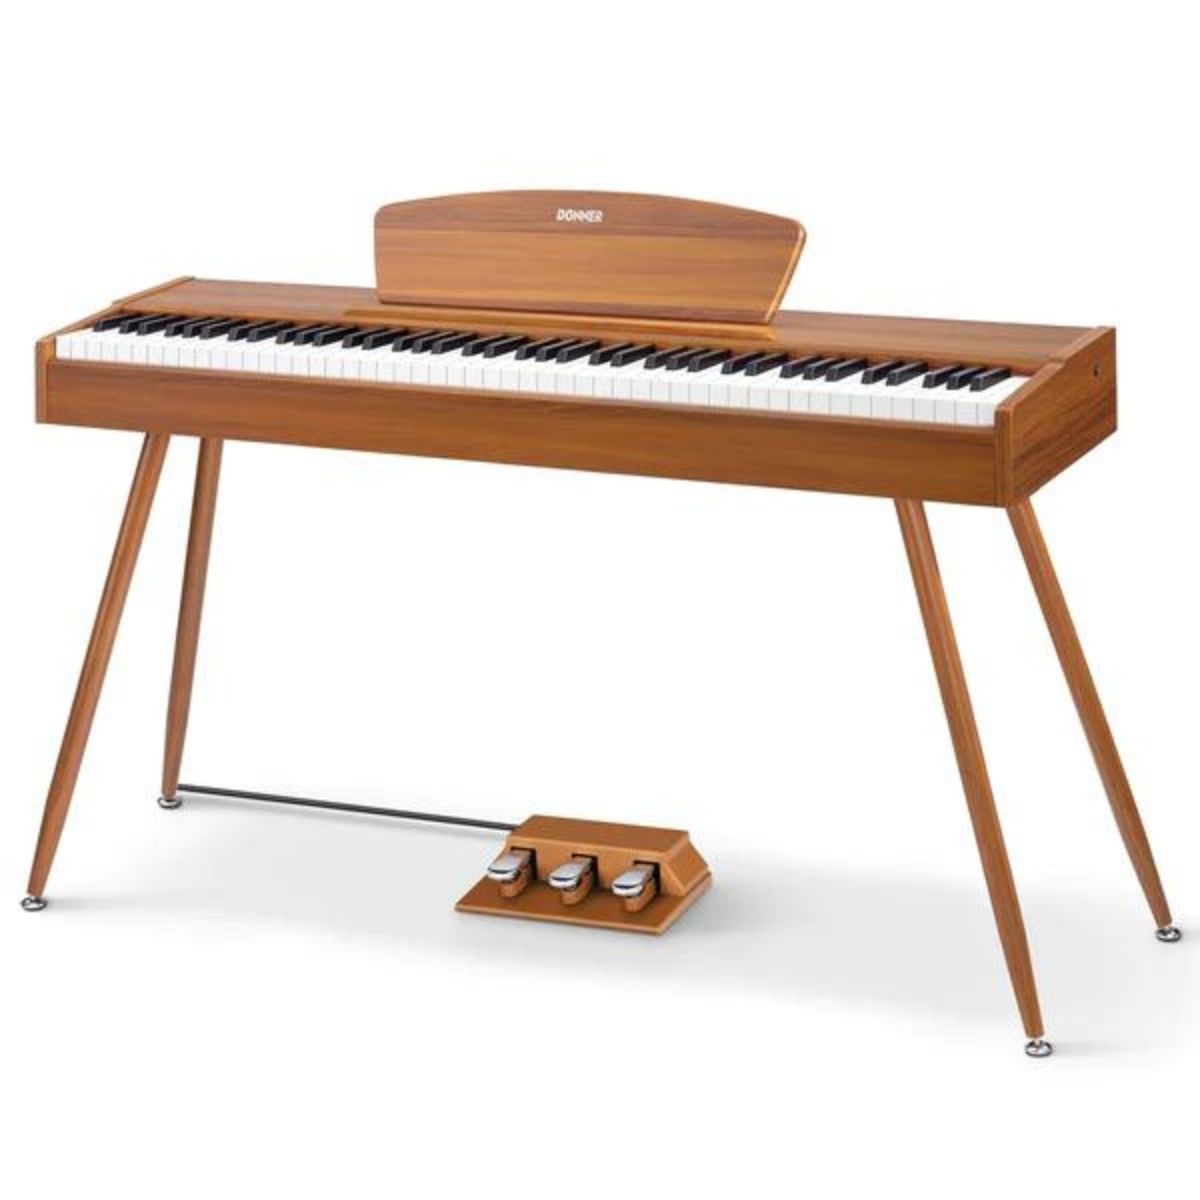 Donner DDP-80 Plus 88-key wooden digital piano